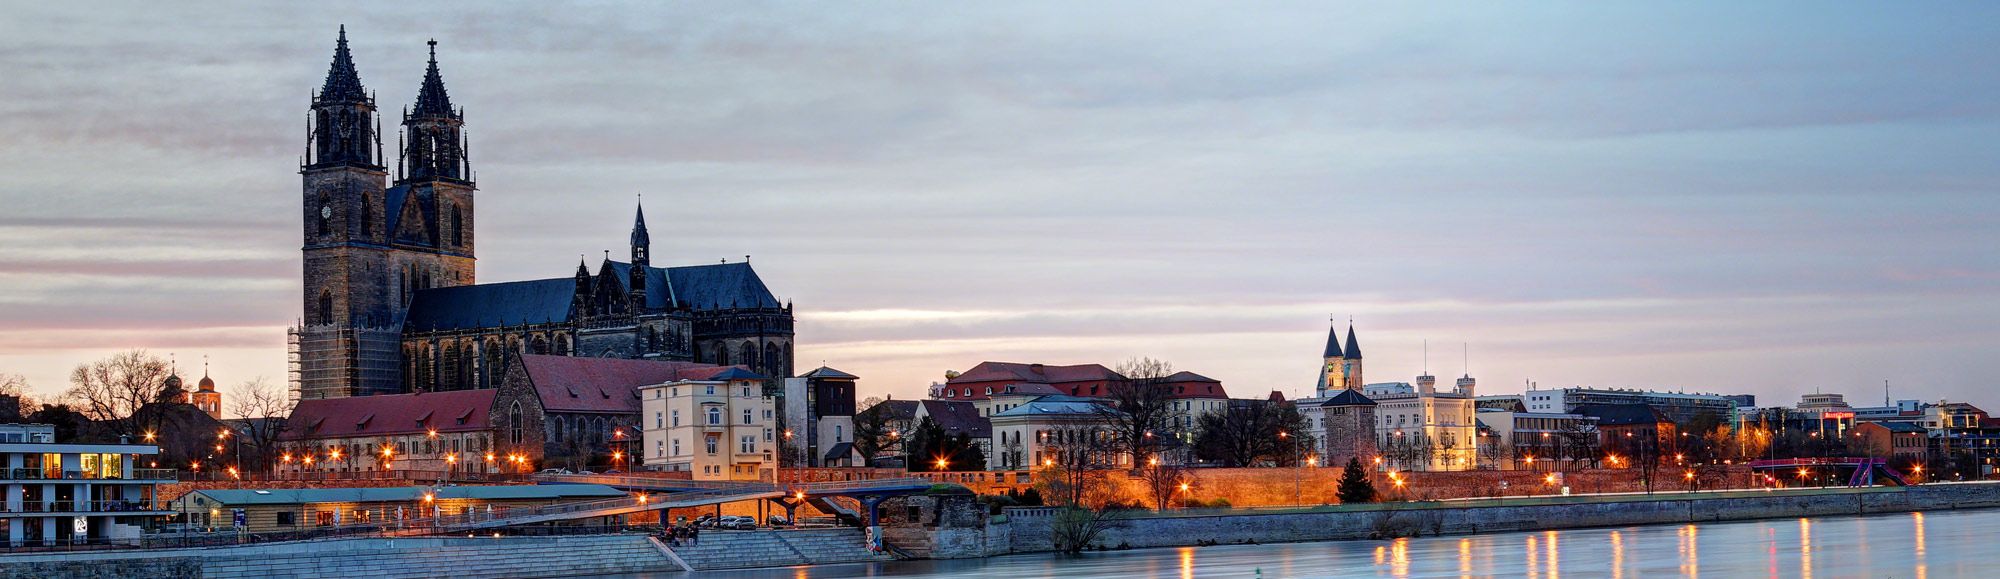 Magdeburg am Abend, Skyline